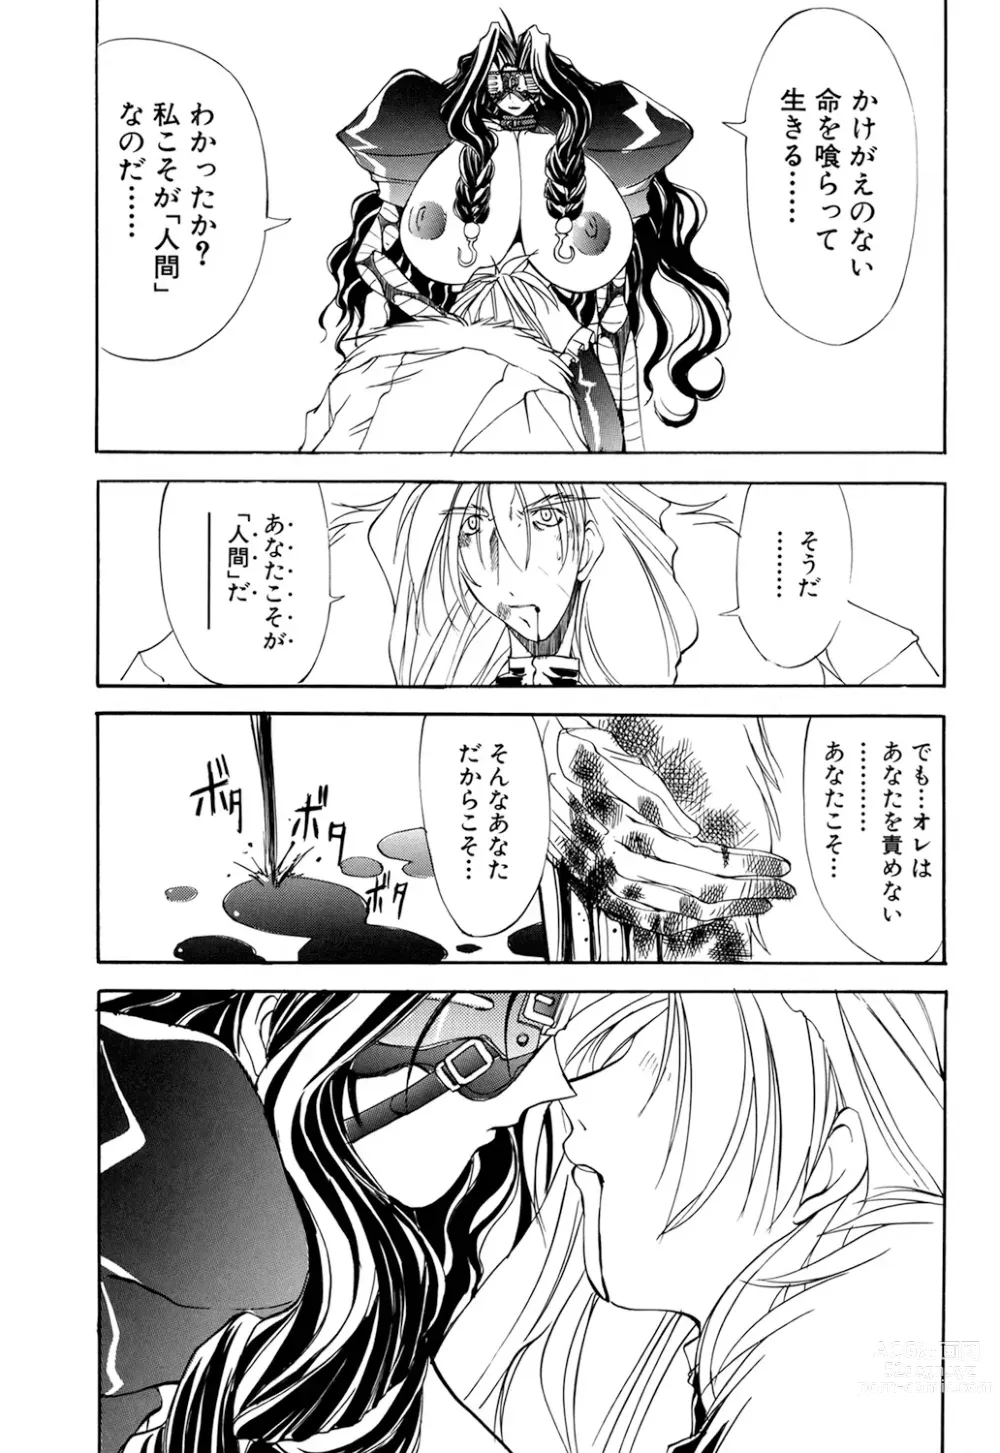 Page 165 of manga Shuukakusai Dainishou - Black Mass